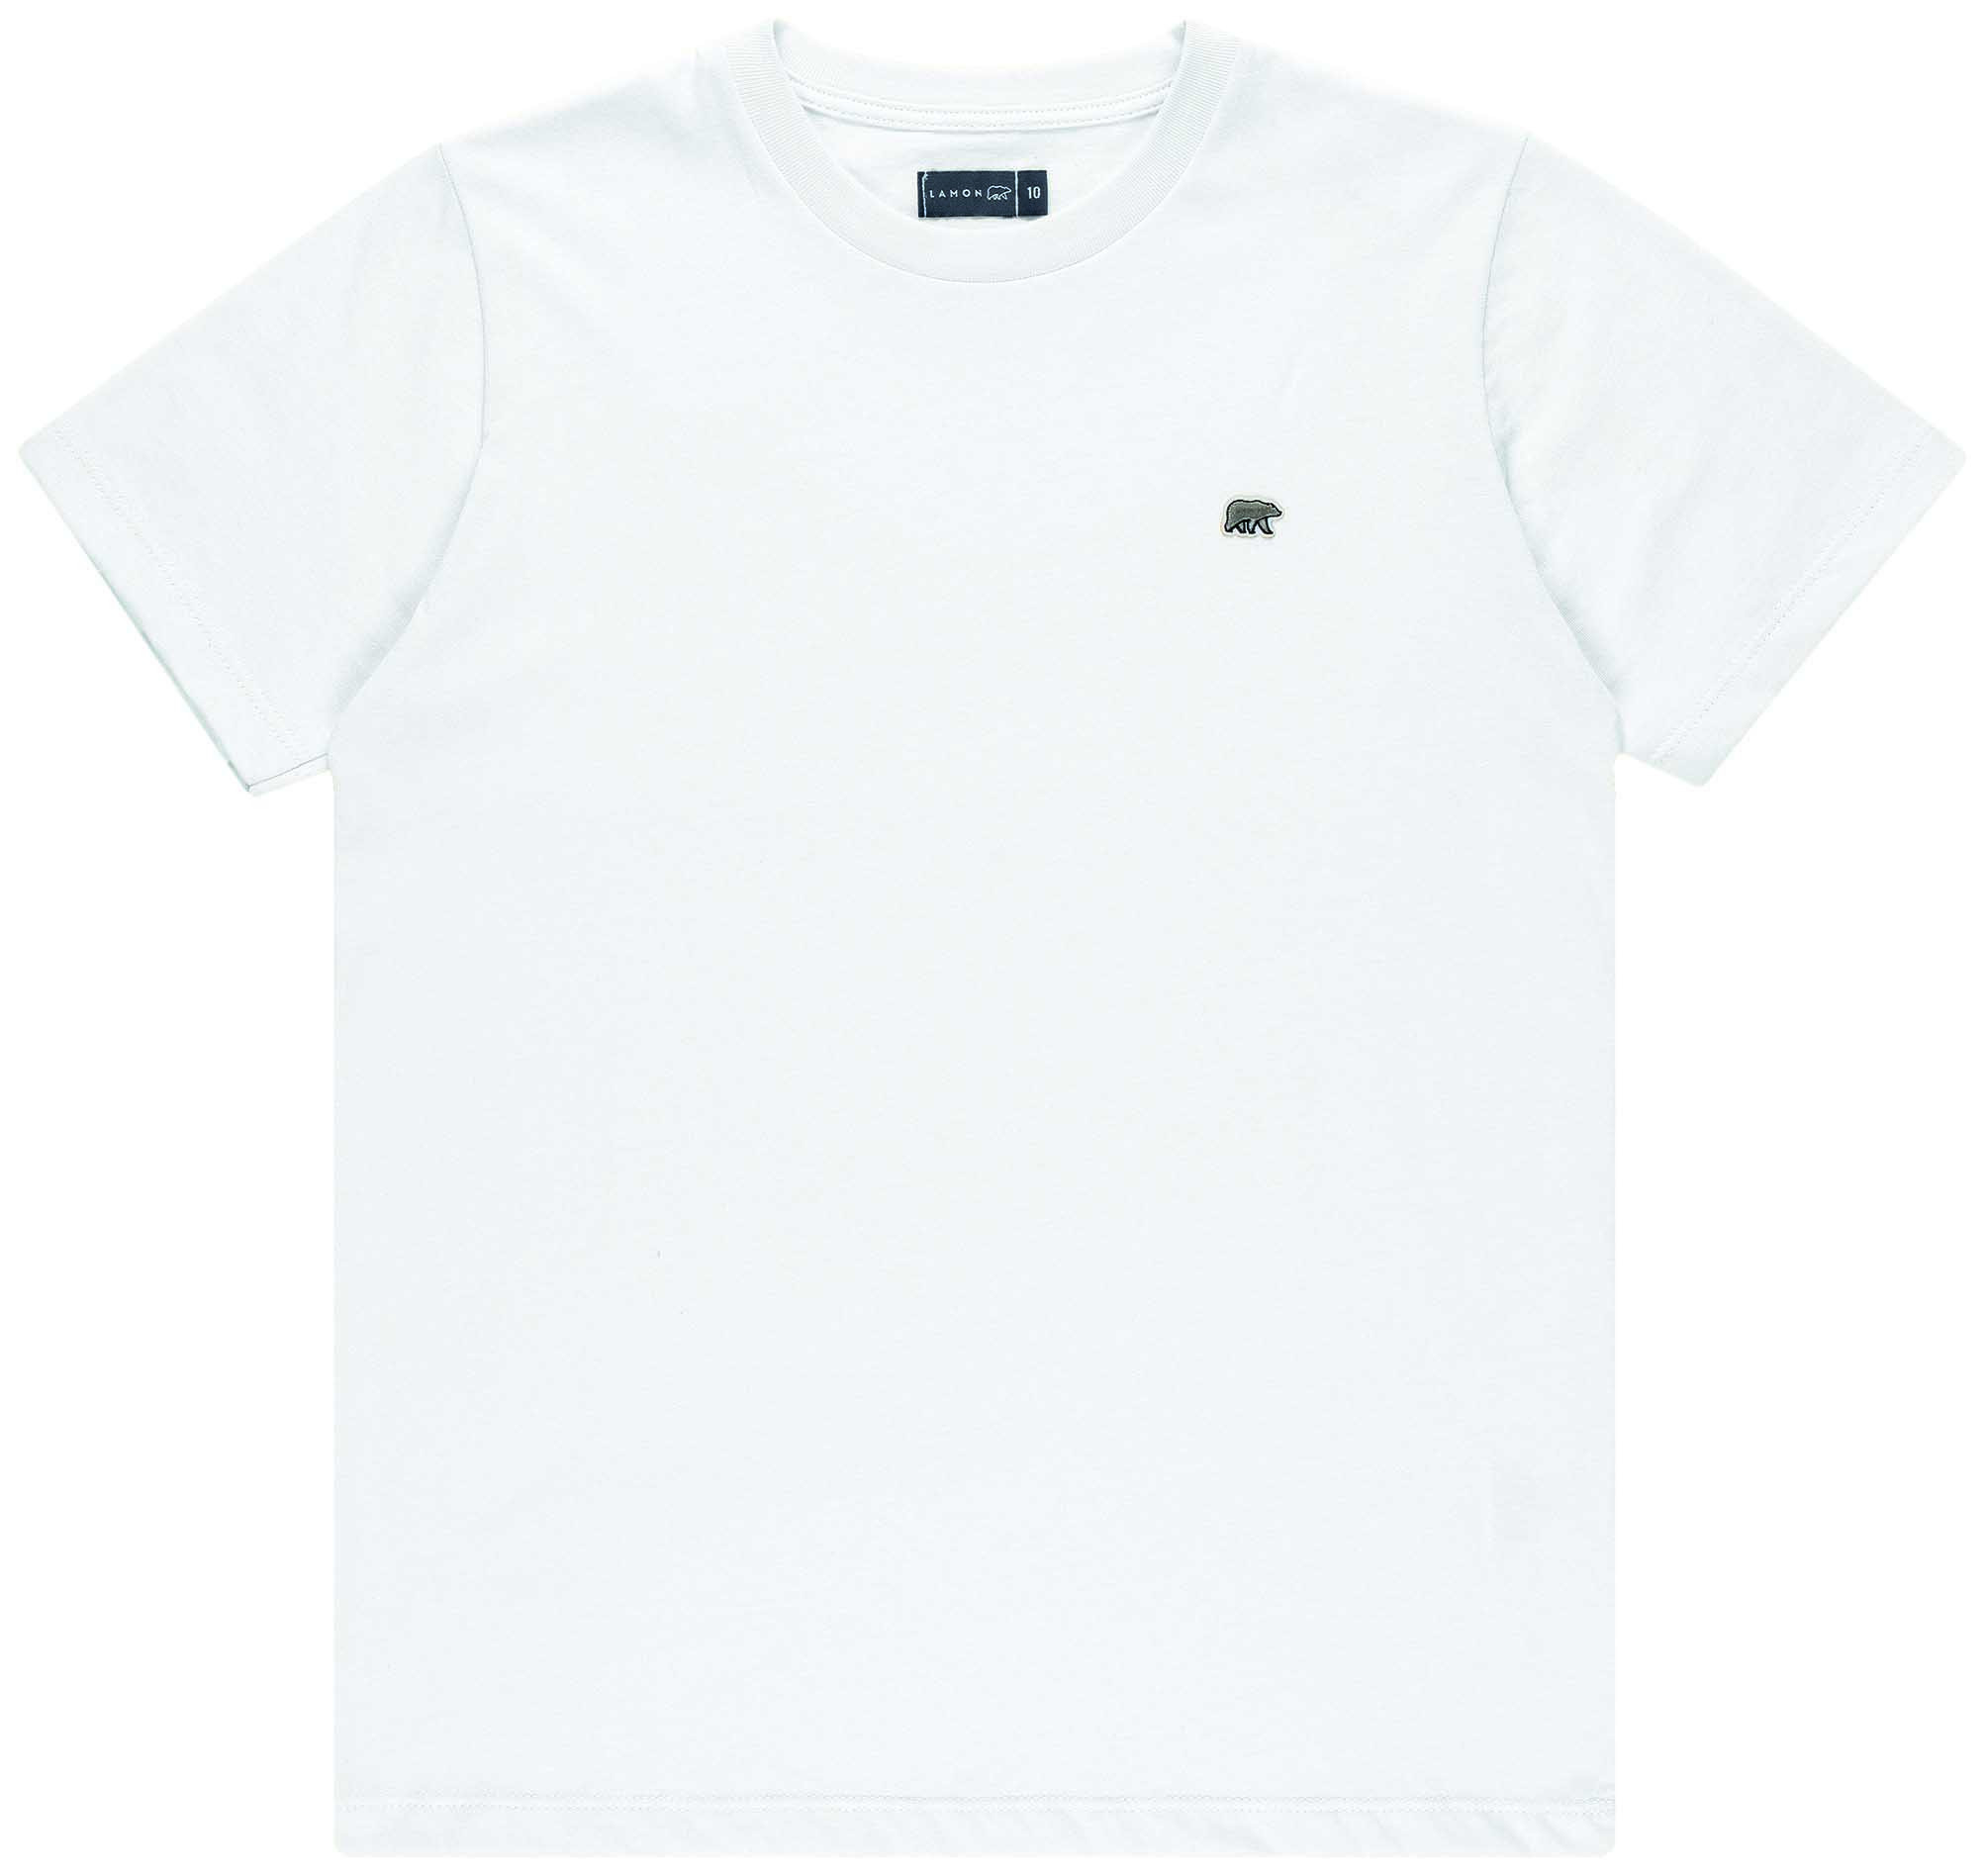 Camiseta Malha Algodão Branca 30109 - Lamon